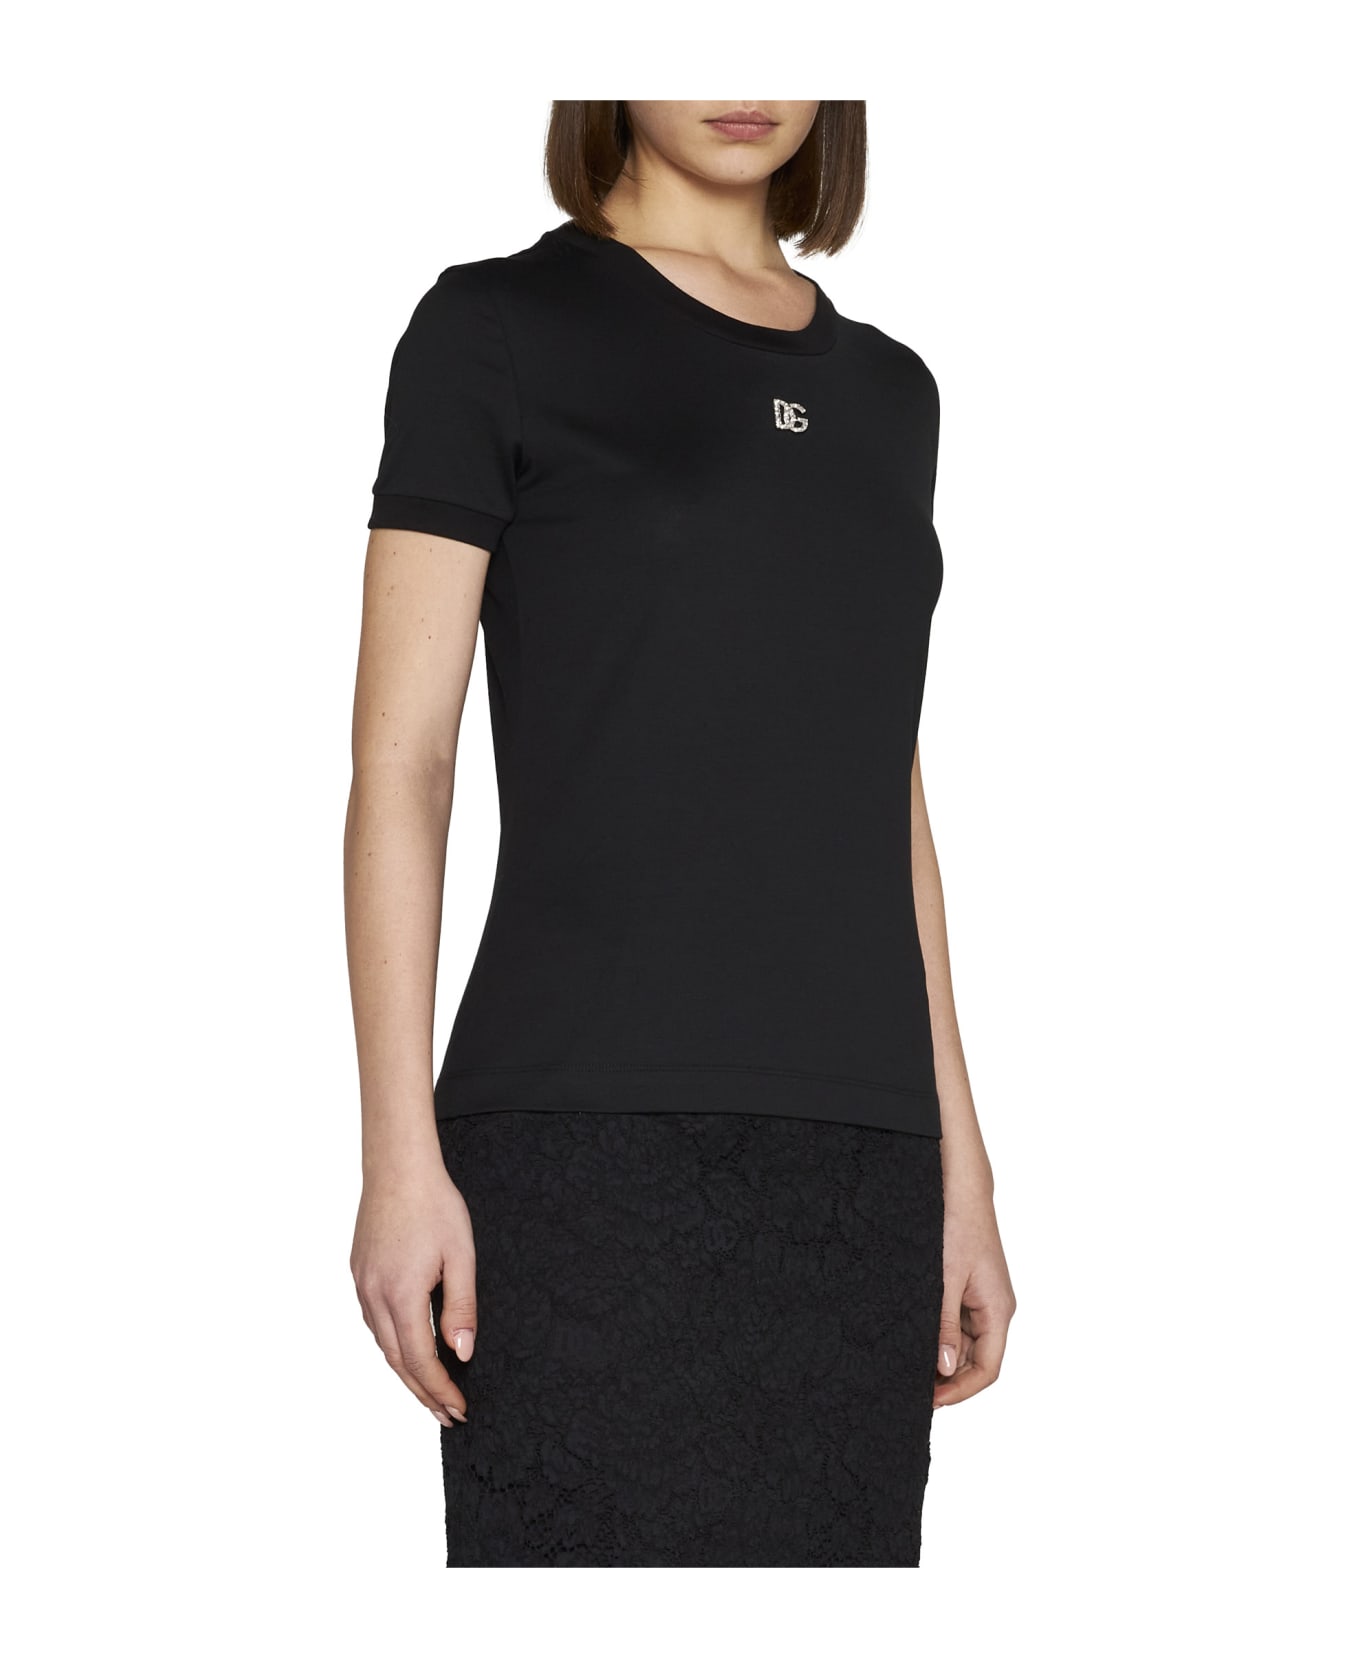 Dolce & Gabbana T-shirt - black Tシャツ